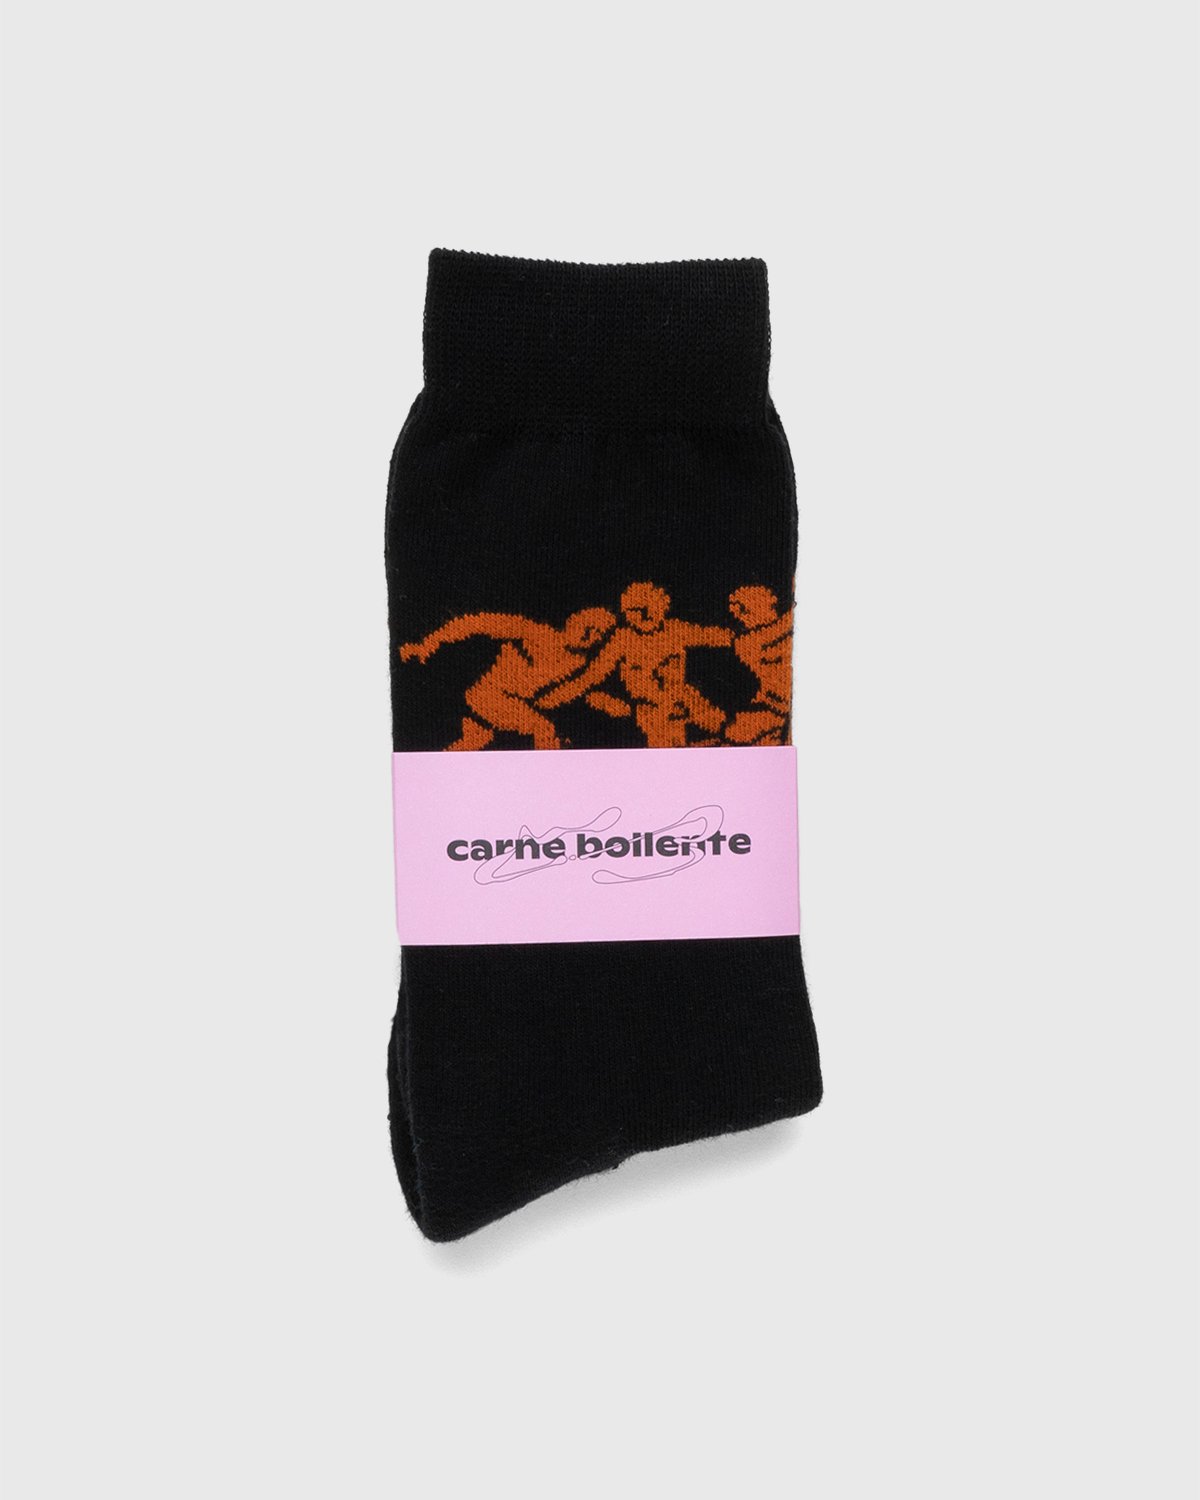 Carne Bollente - Who Lies Beneath Socks Black - Accessories - Black - Image 2